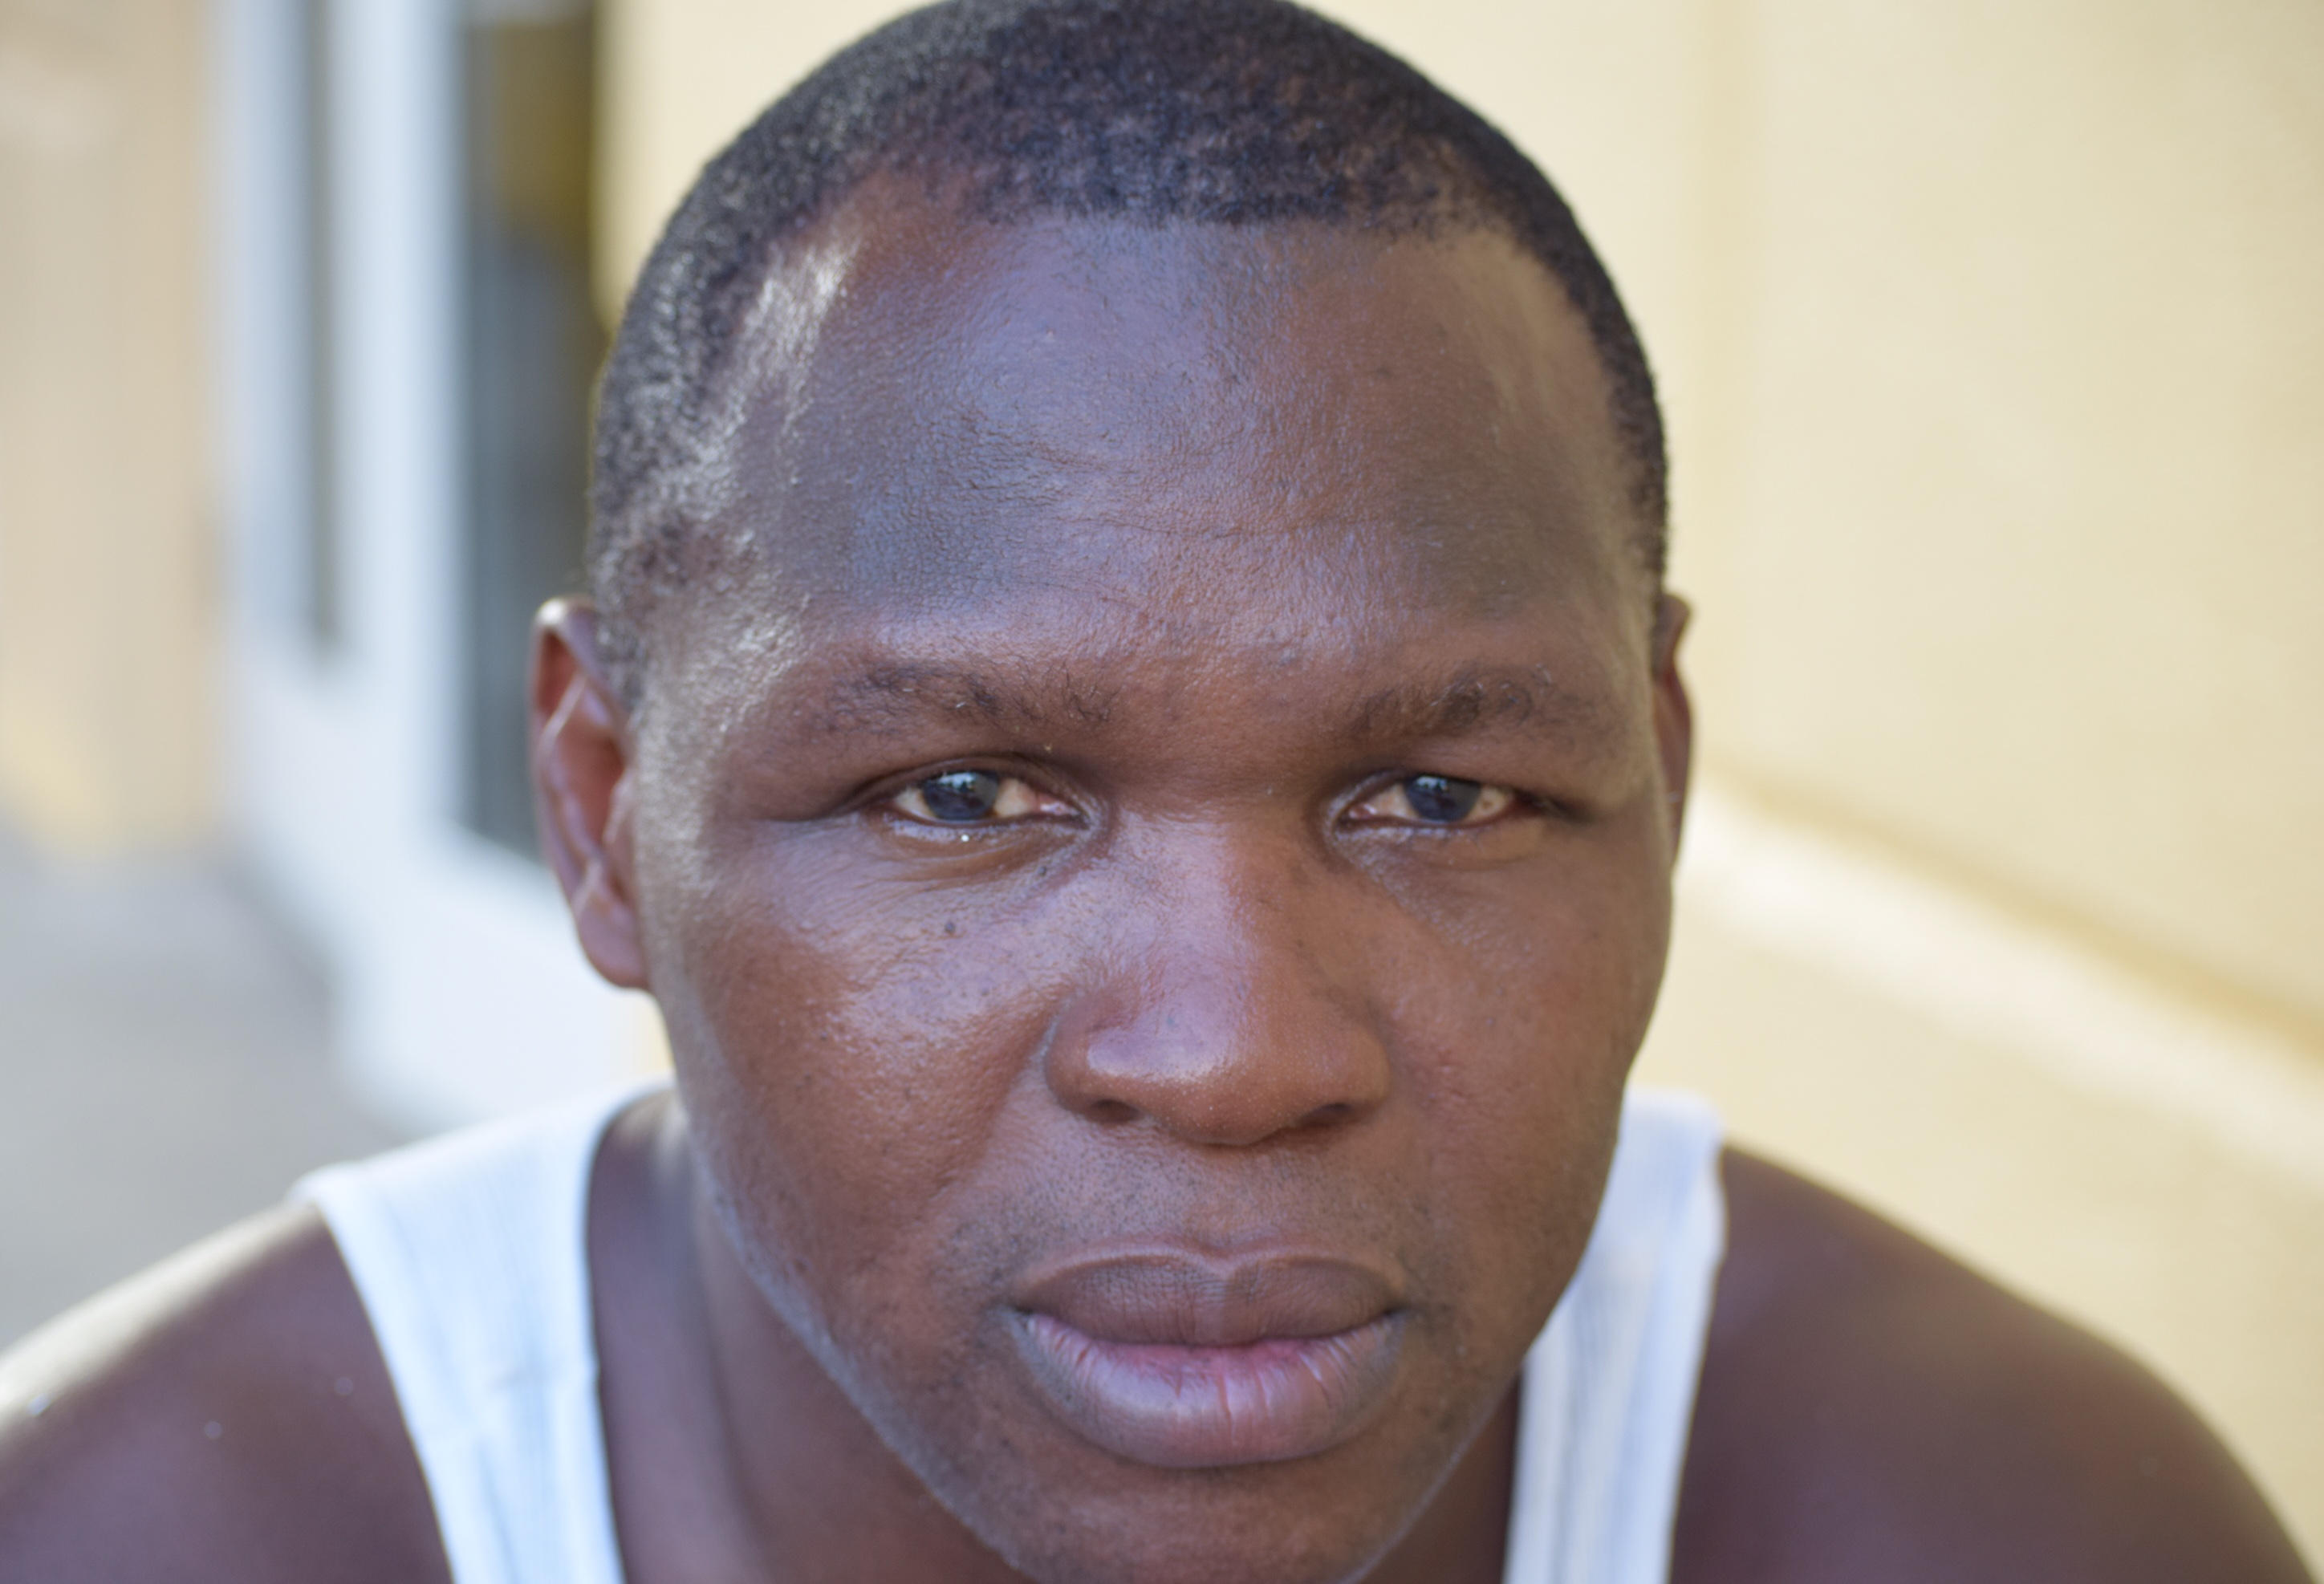 “The Preacherman” Cometh Back: Interview with former world cruiserweight champion Robert Daniels